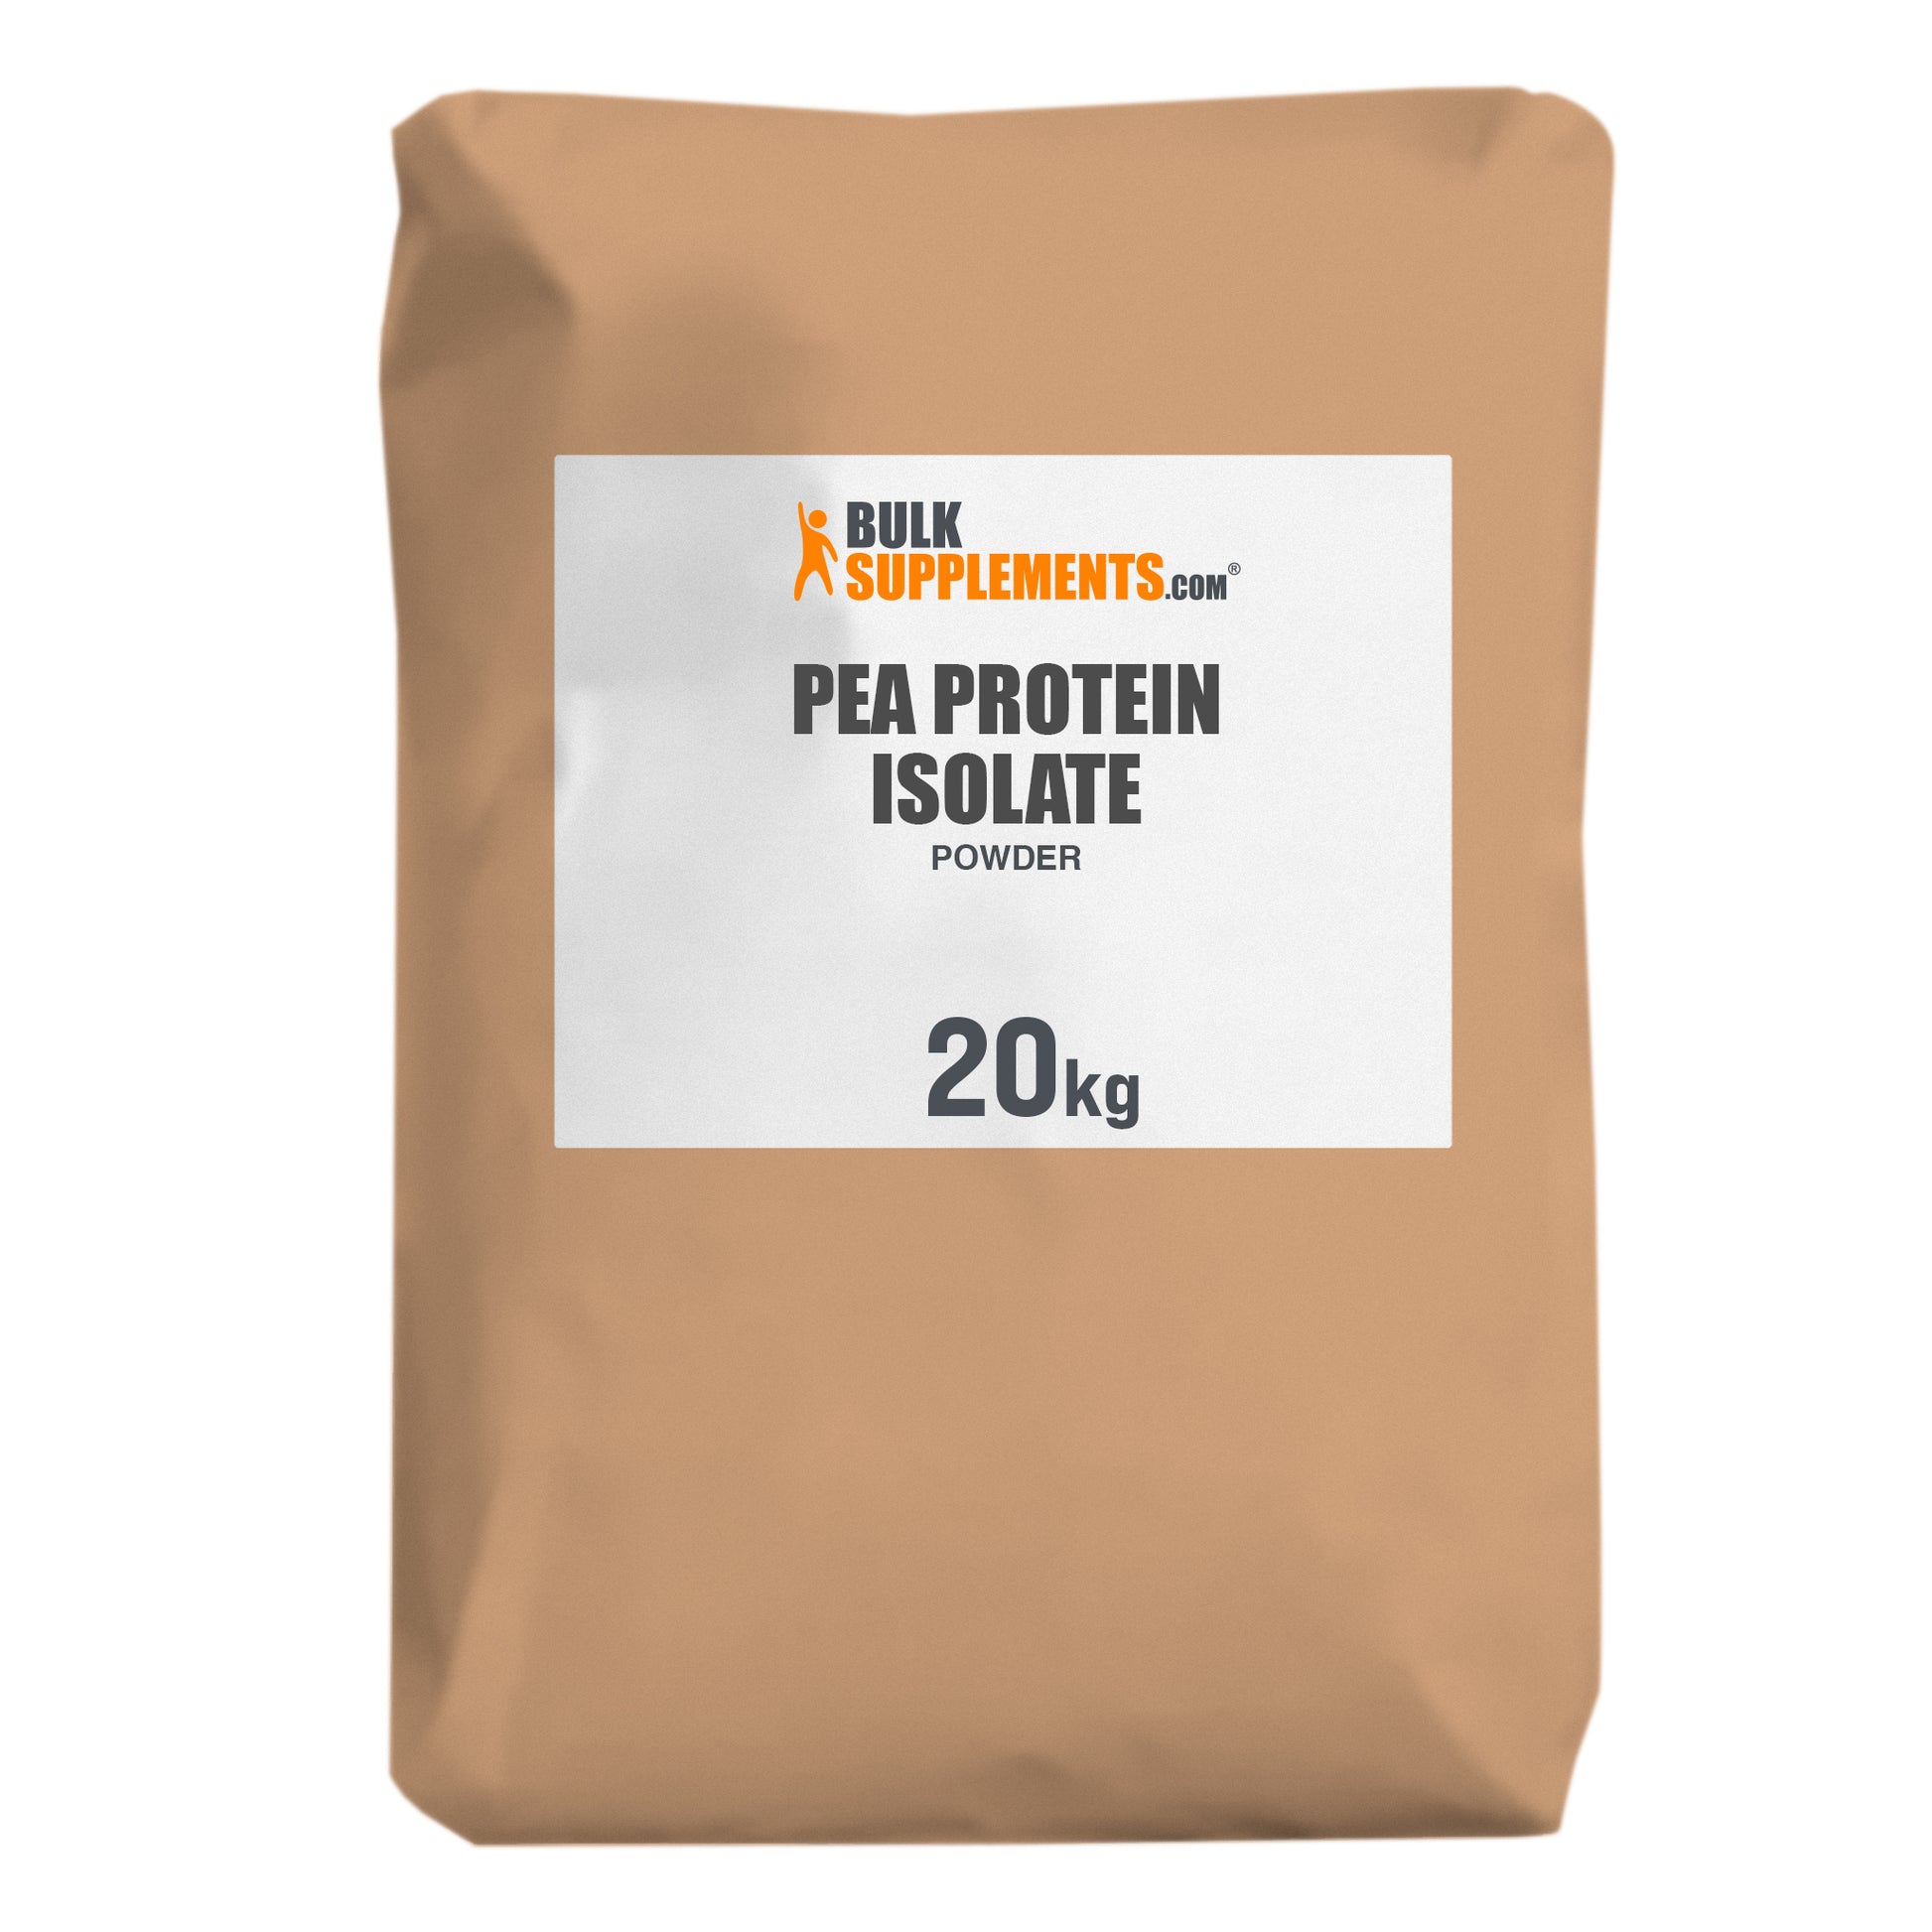 BulkSupplements.com Pea Protein Isolate Powder 20kg bag